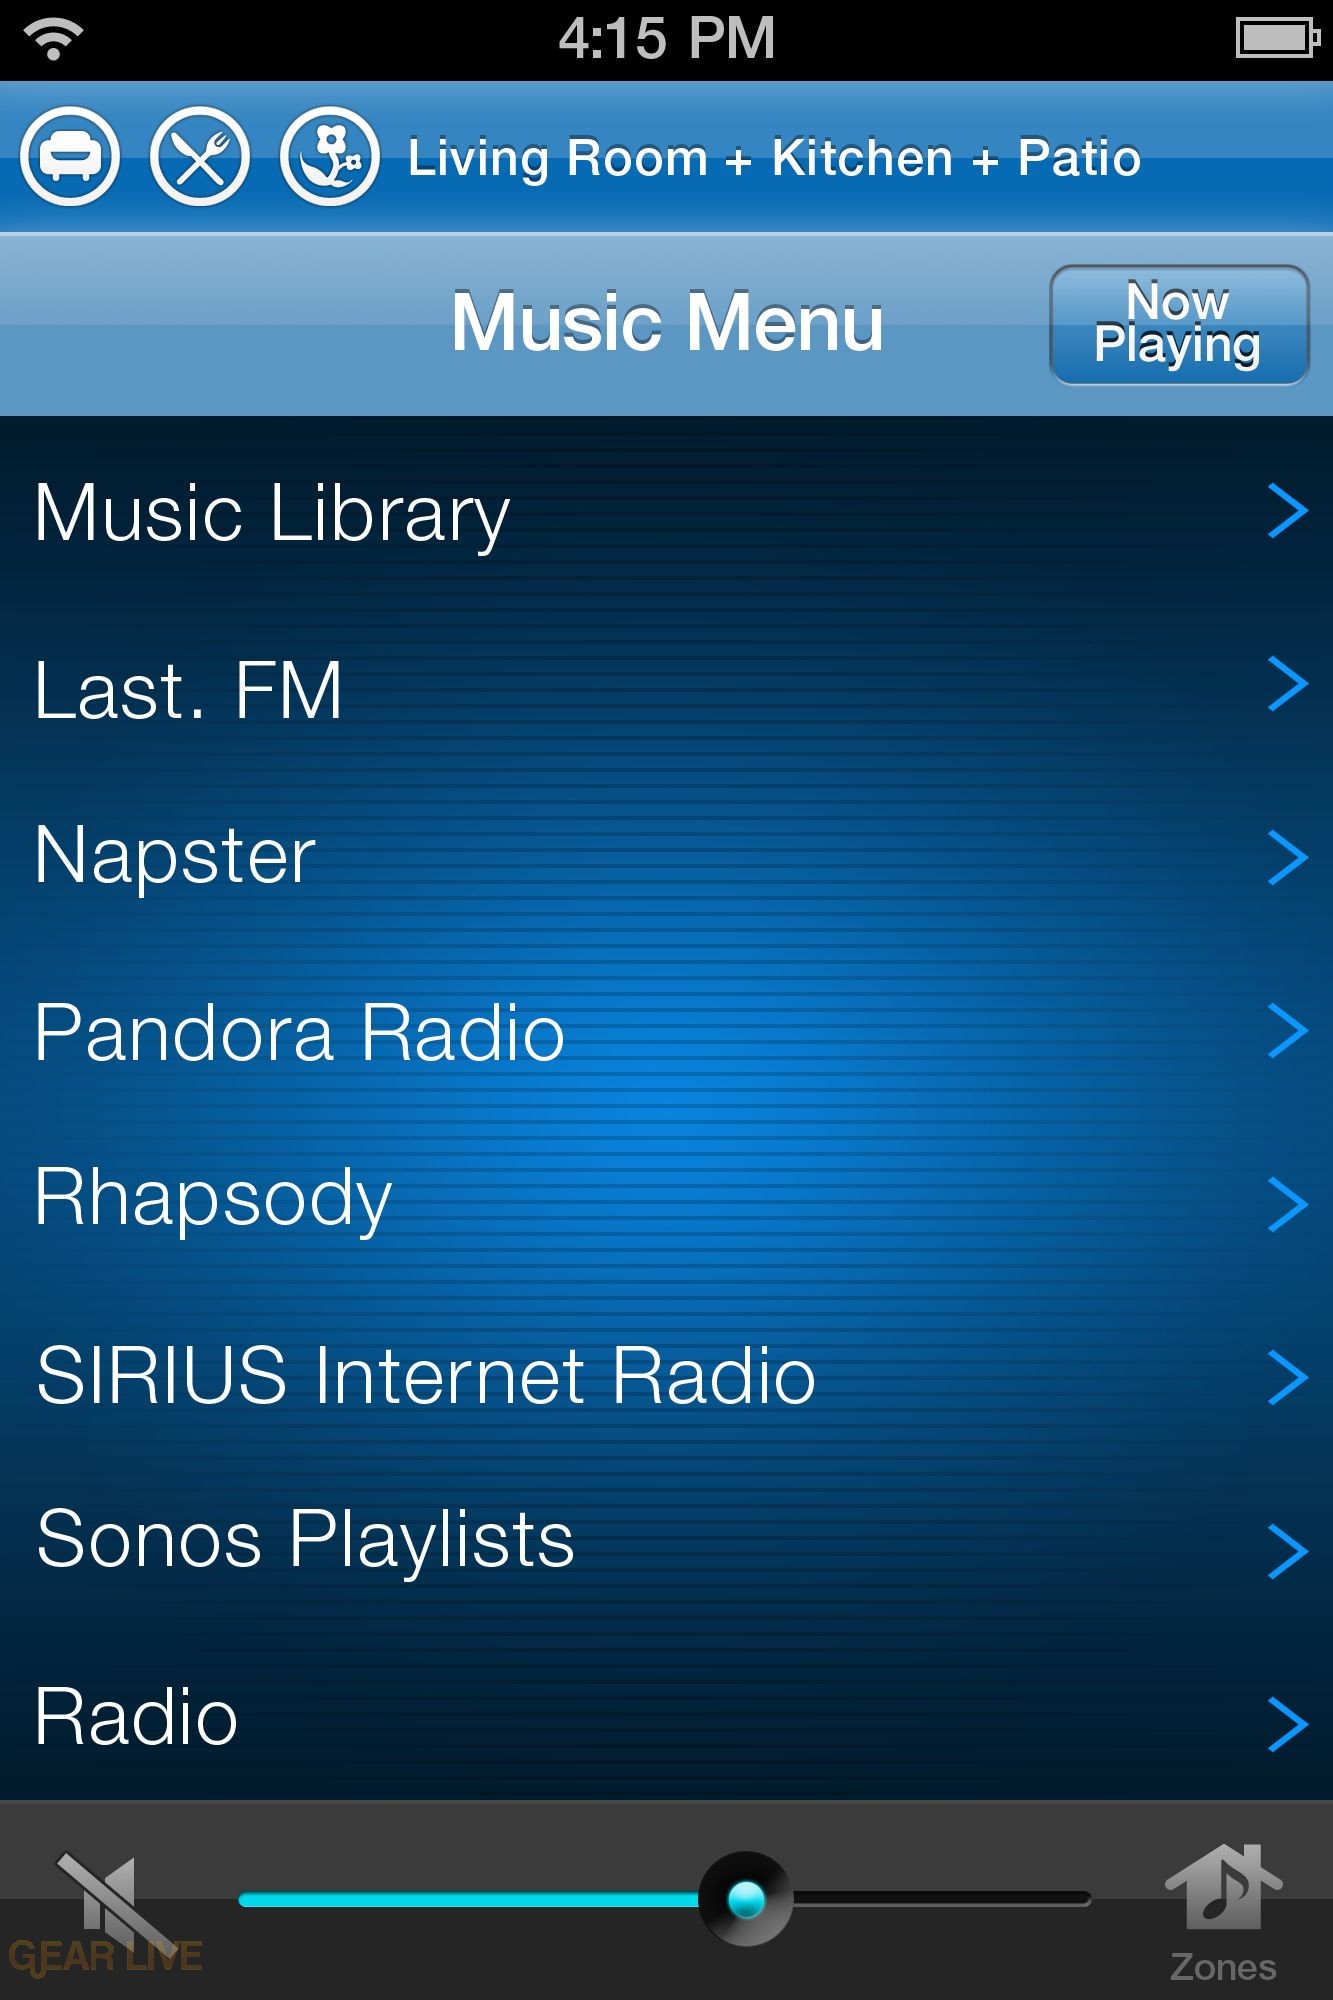 Sonos iPhone: List View